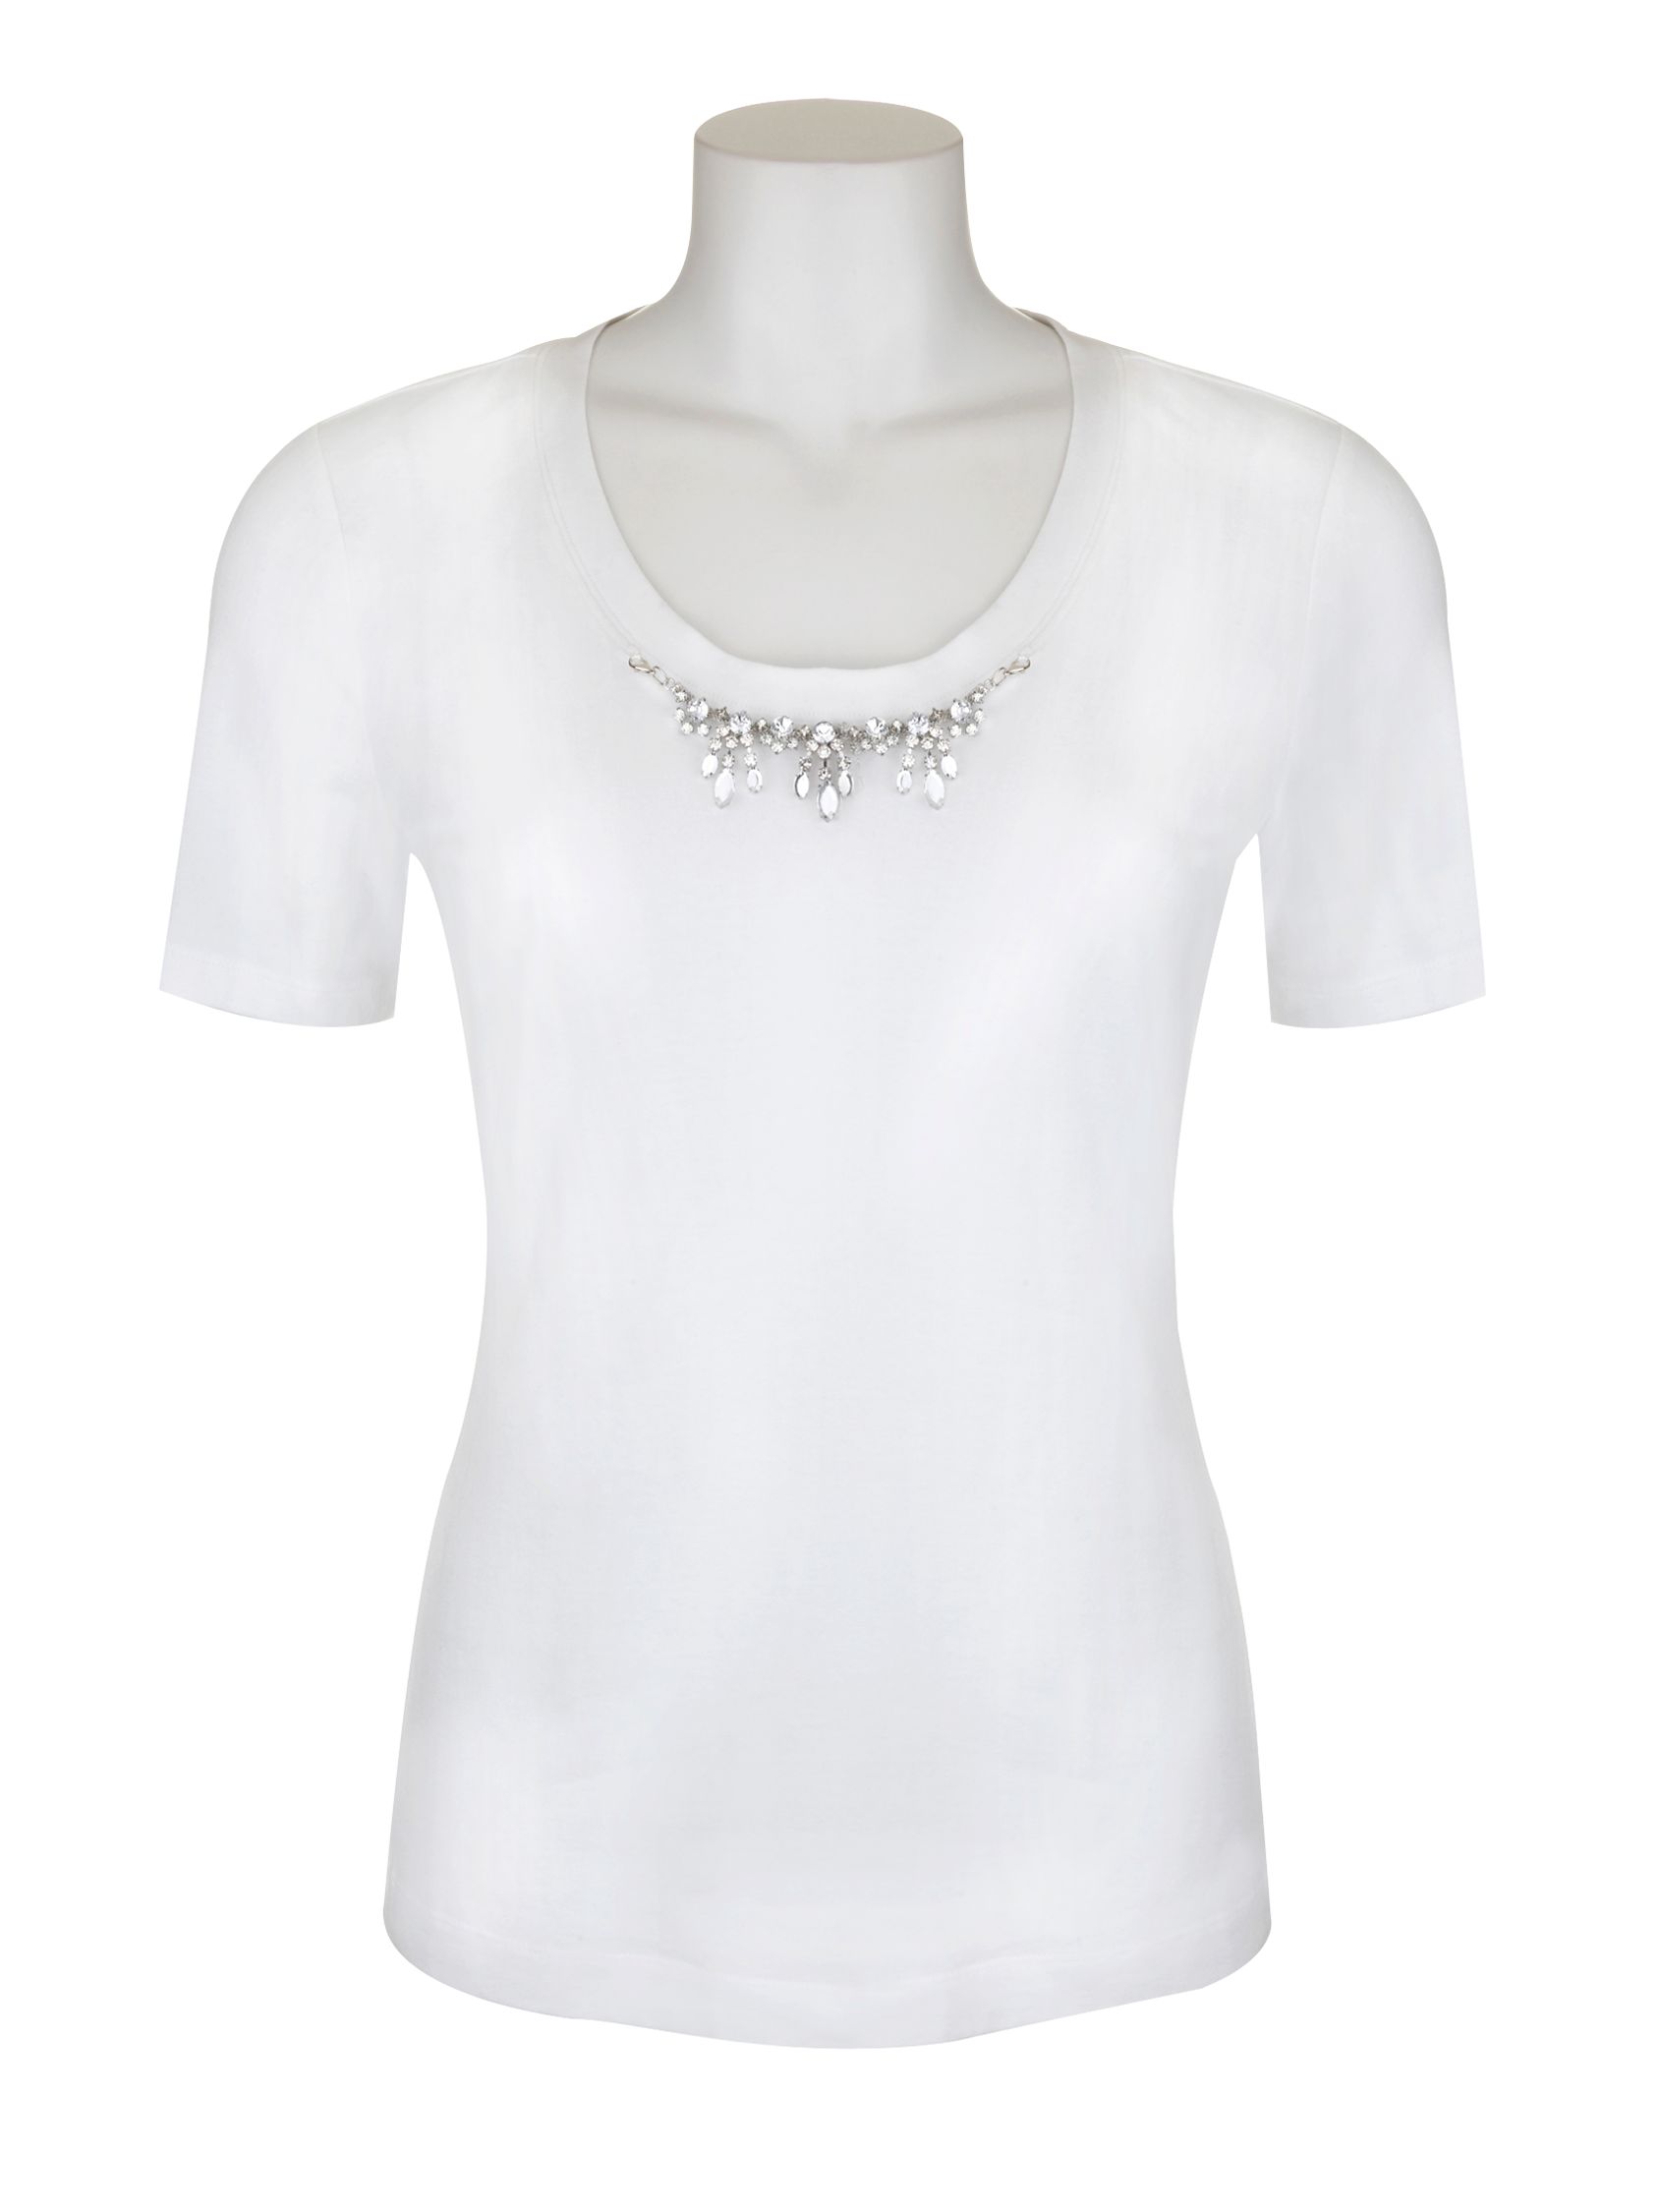 FWM Cotton Lycra Gem T-Shirt, White